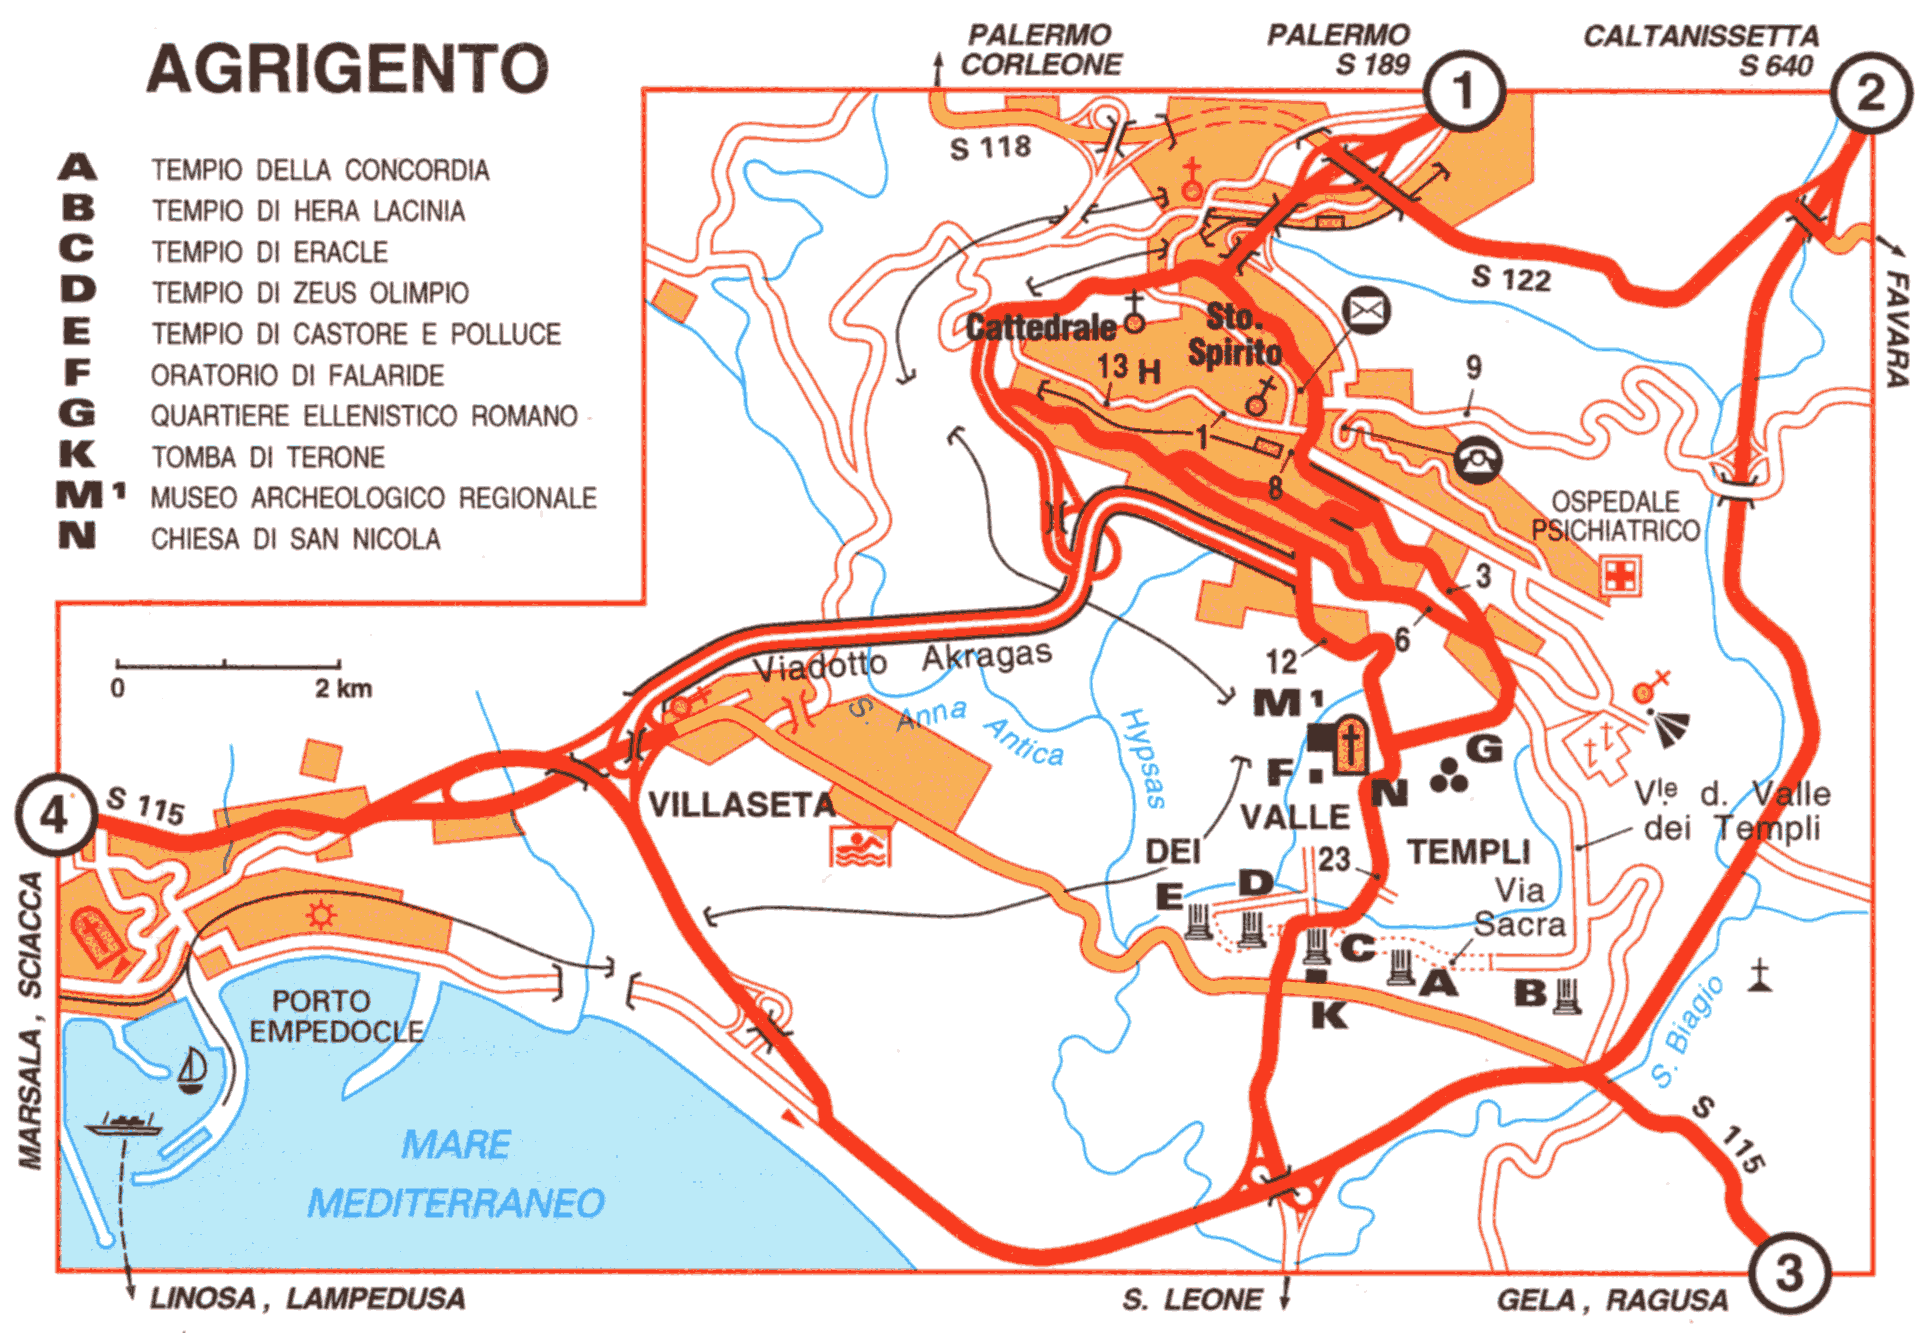 Map of Agrigento - Mappa di Agrigento